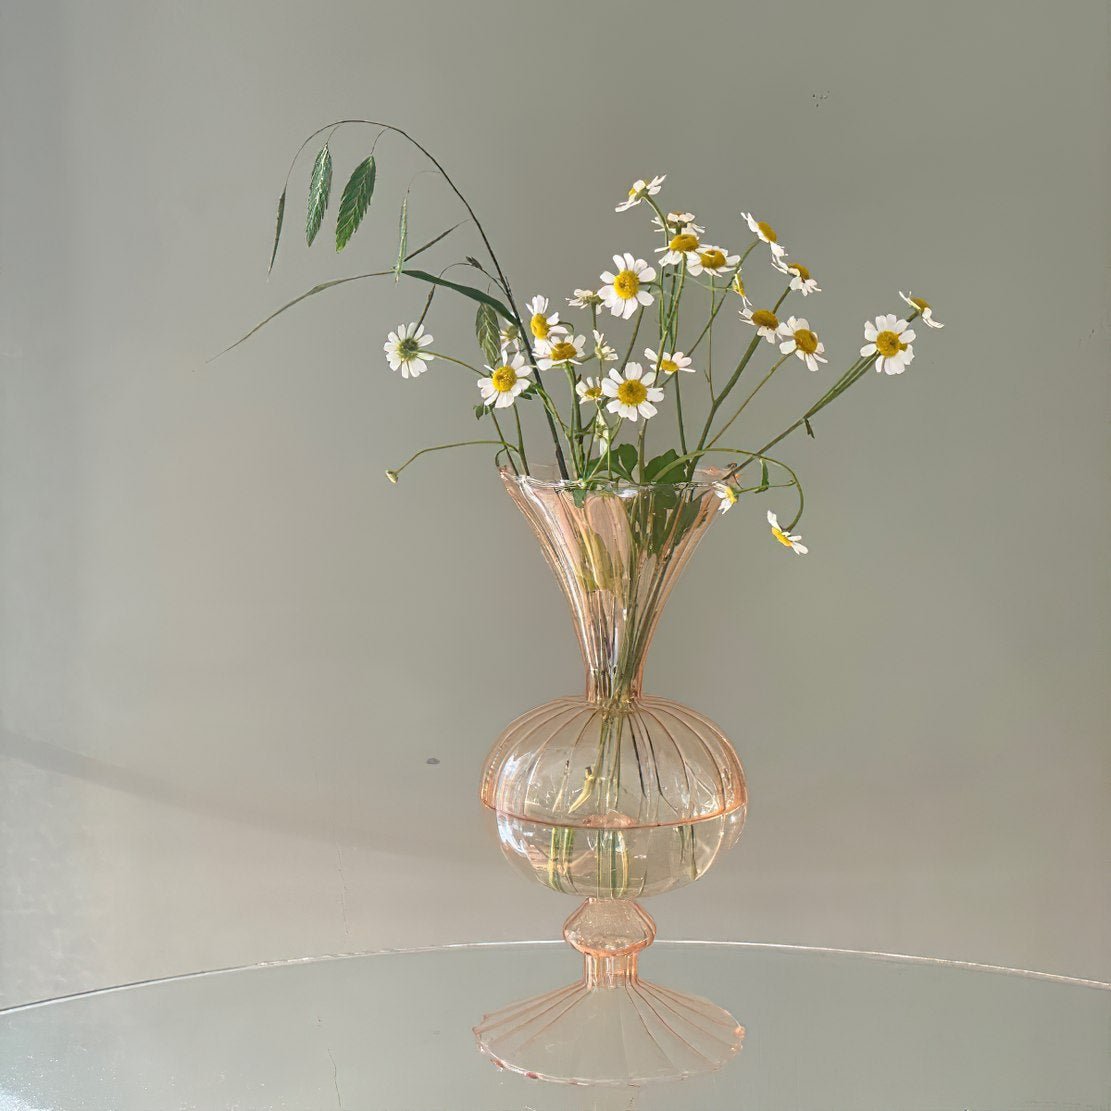 Orange classic romantic glass vase with white flowers